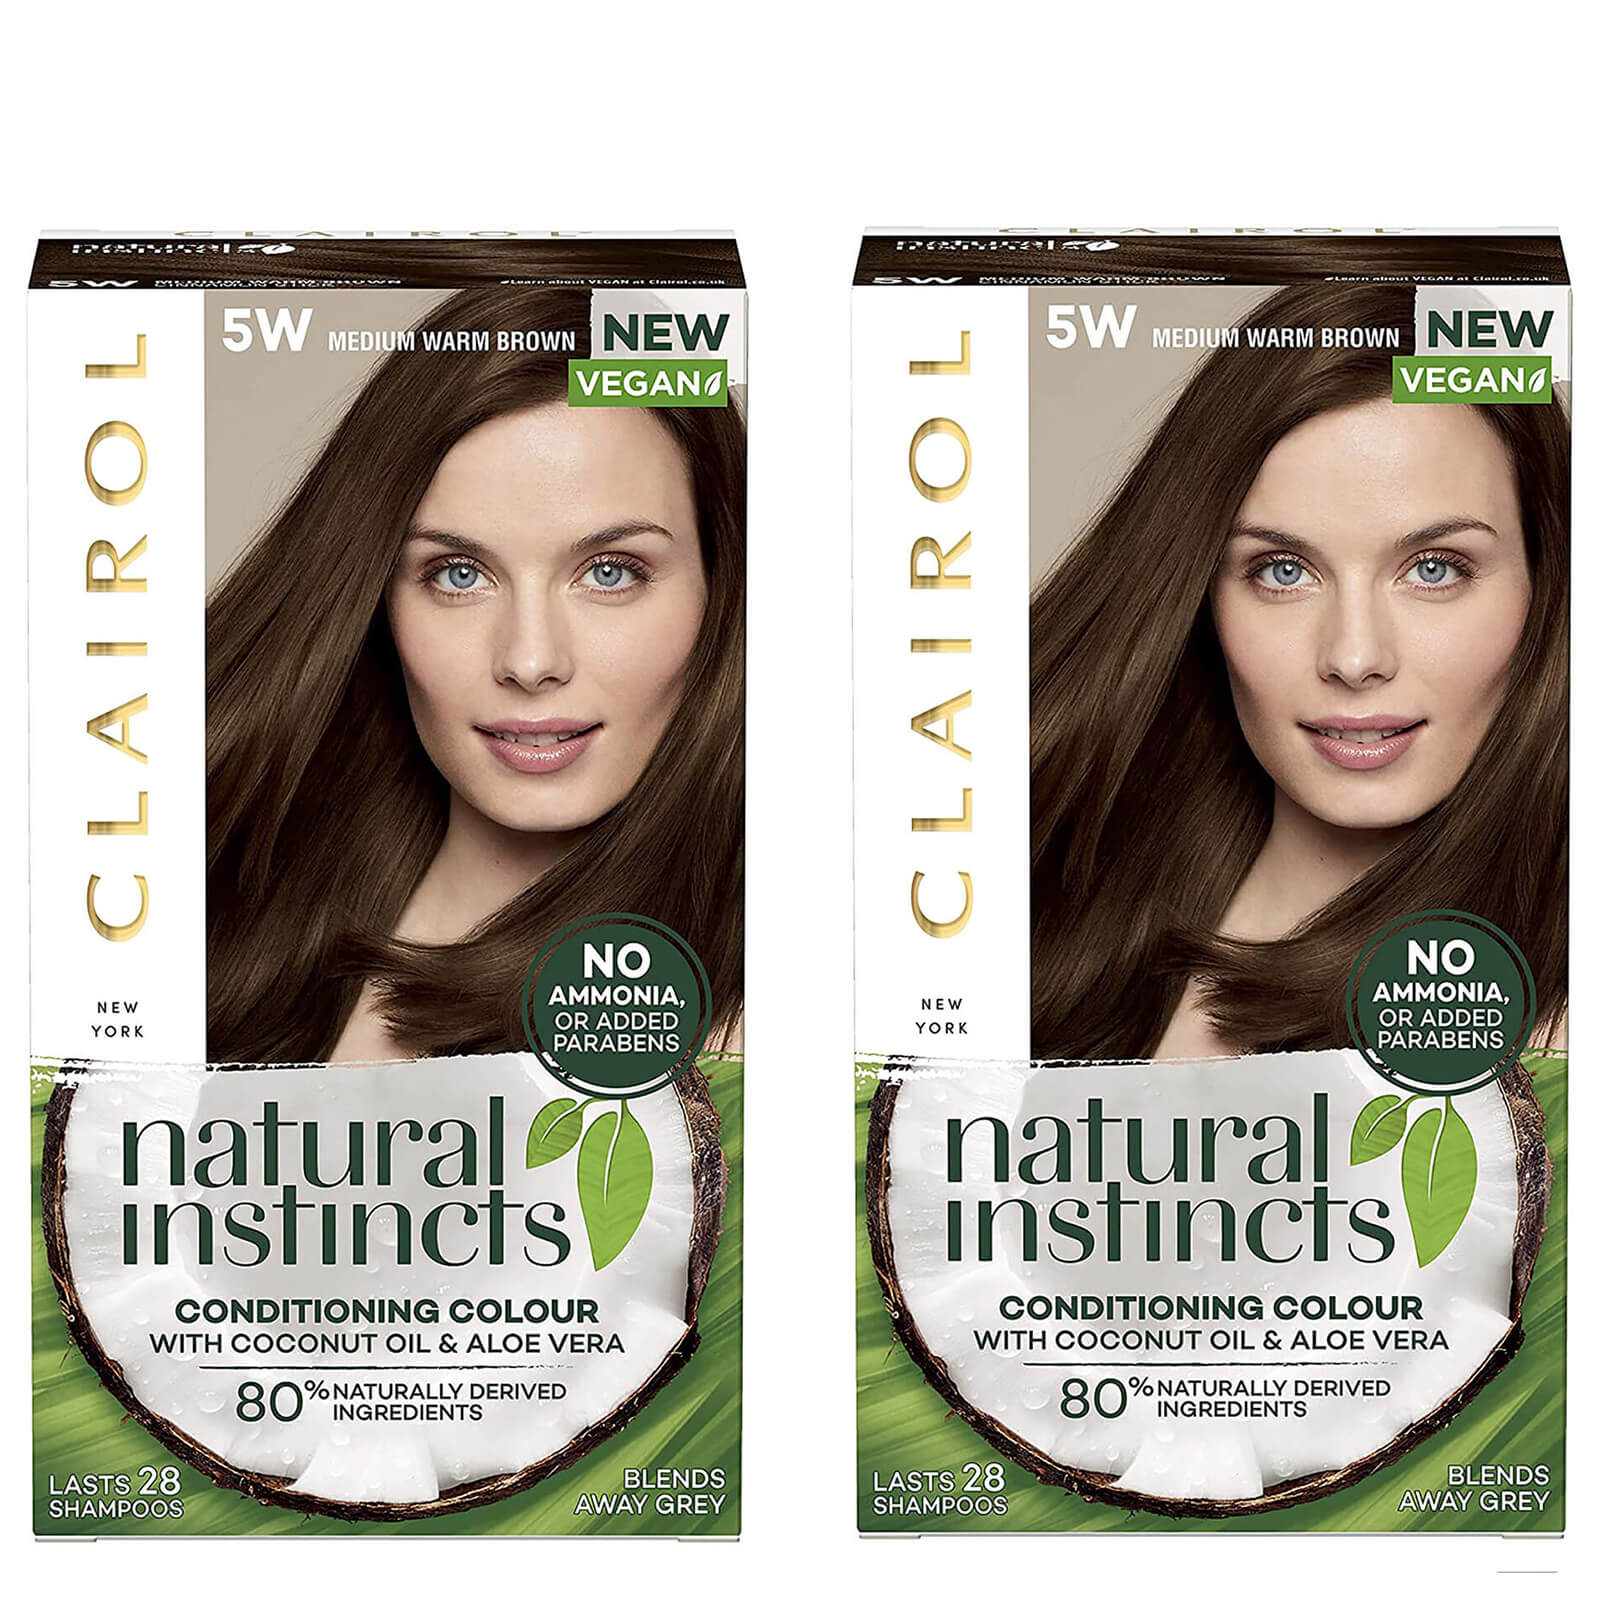 Clairol Natural Instincts Semi-Permanent No Ammonia Vegan Hair Dye Duo (Various Shades) - 5W Medium Warm Brown